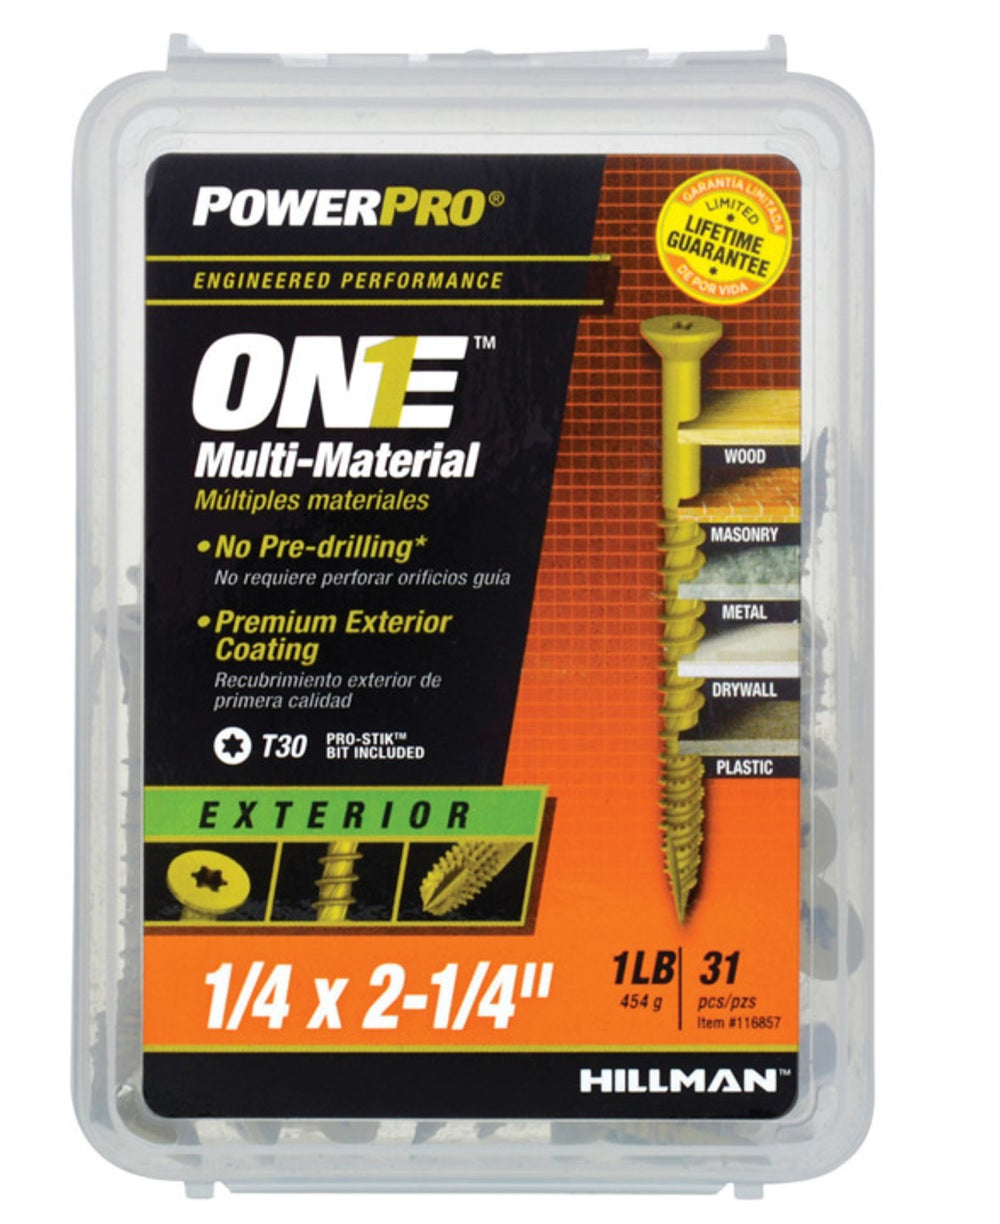 Hillman Fasteners 116857 Power Pro ONE Multi-Material Screws, 1/4" x 2-1/4"